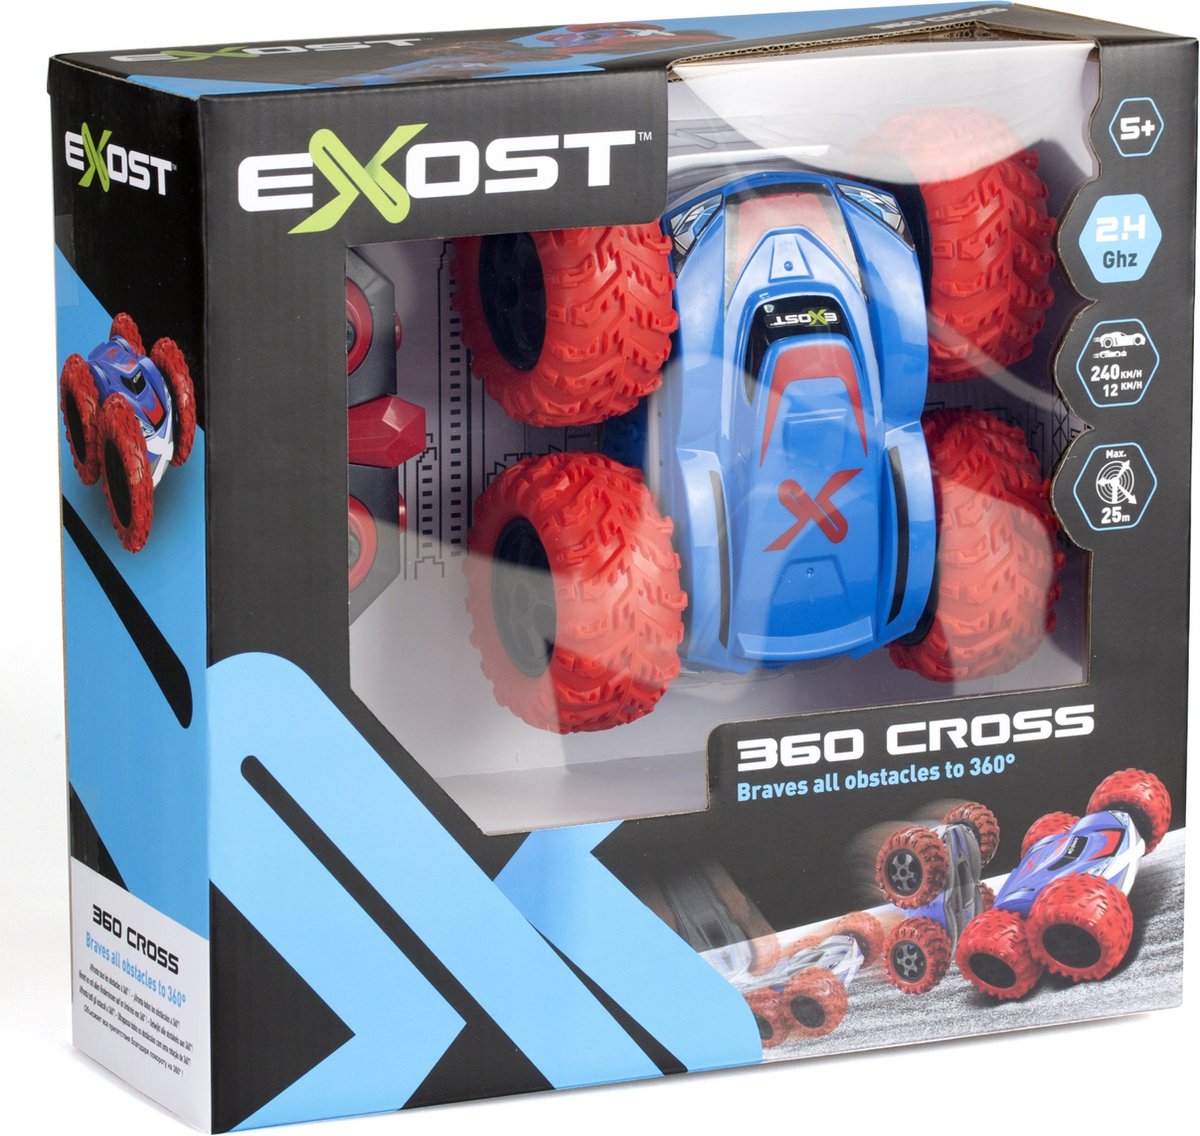 EXOST 360 Cross Voiture Télécommandée - 20257 - 2,4Ghz Échelle 1:18 -  assortiment 3